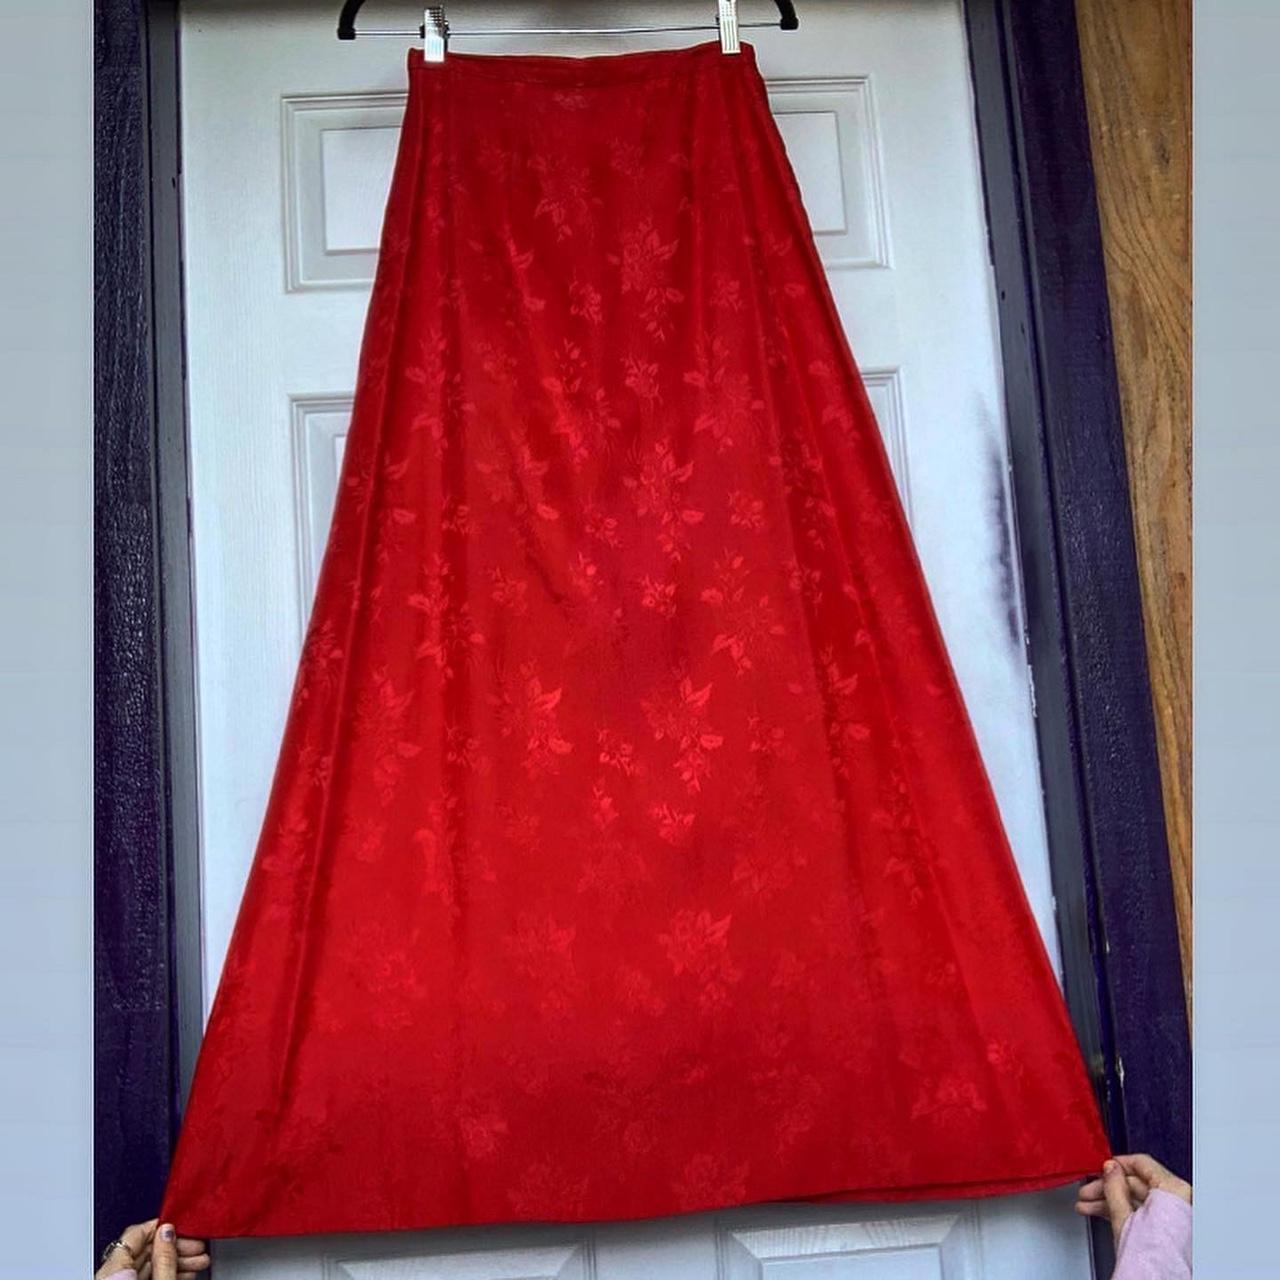 Anusree Nair in a red brocade skirt set!